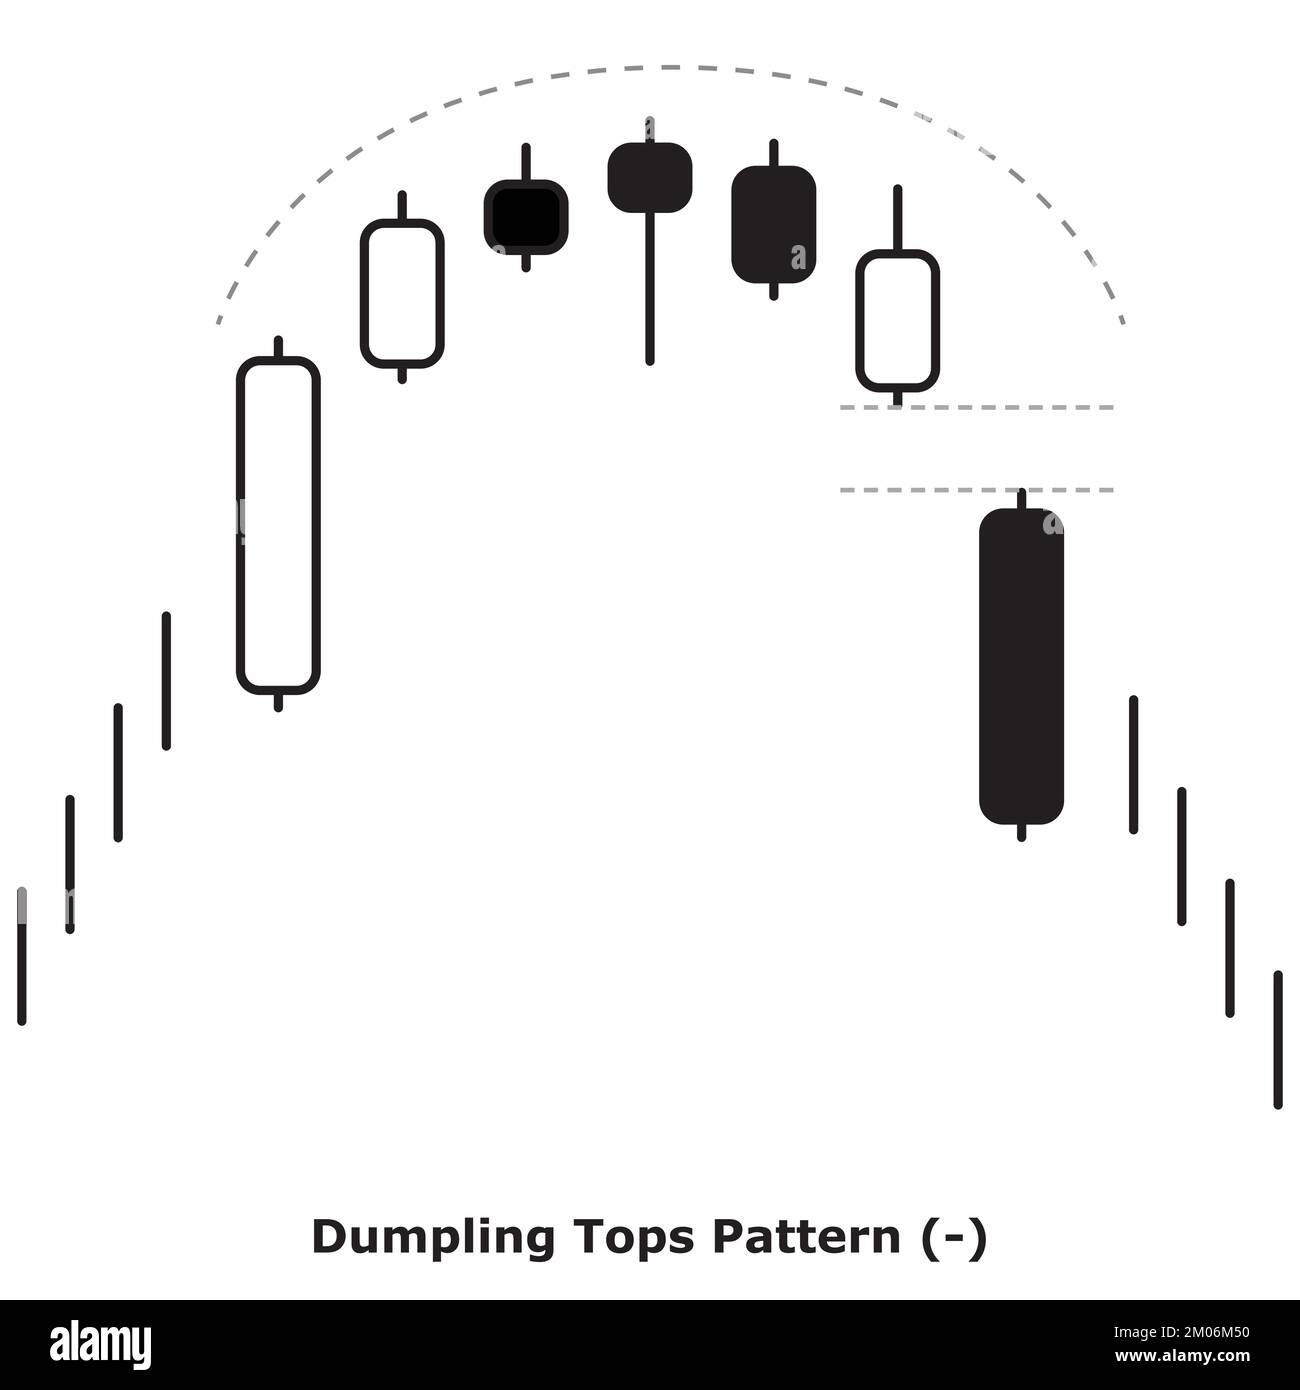 Dumpling Tops Pattern - Bearish - White & Black - Round - Bearish Reversal Japanese Candlestick Pattern - Multiple Patterns Stock Vector